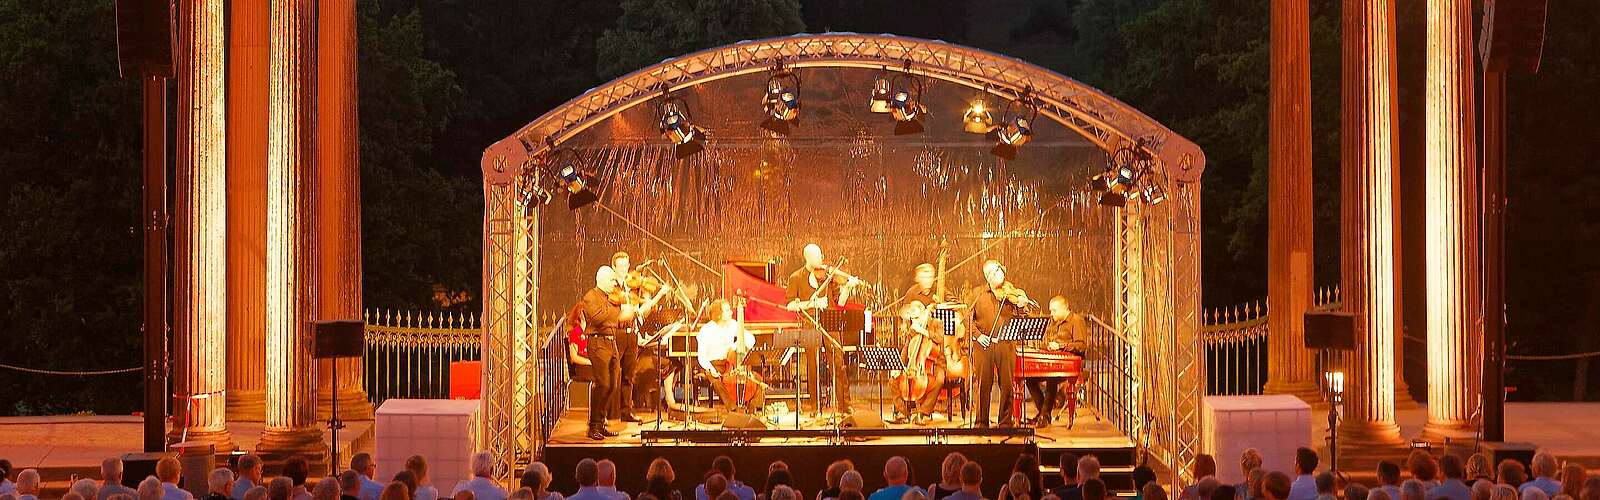 Musikfestspiele Potsdam,
        
    

        Picture: Fotograf / Lizenz - Media Import/André Stiebitz